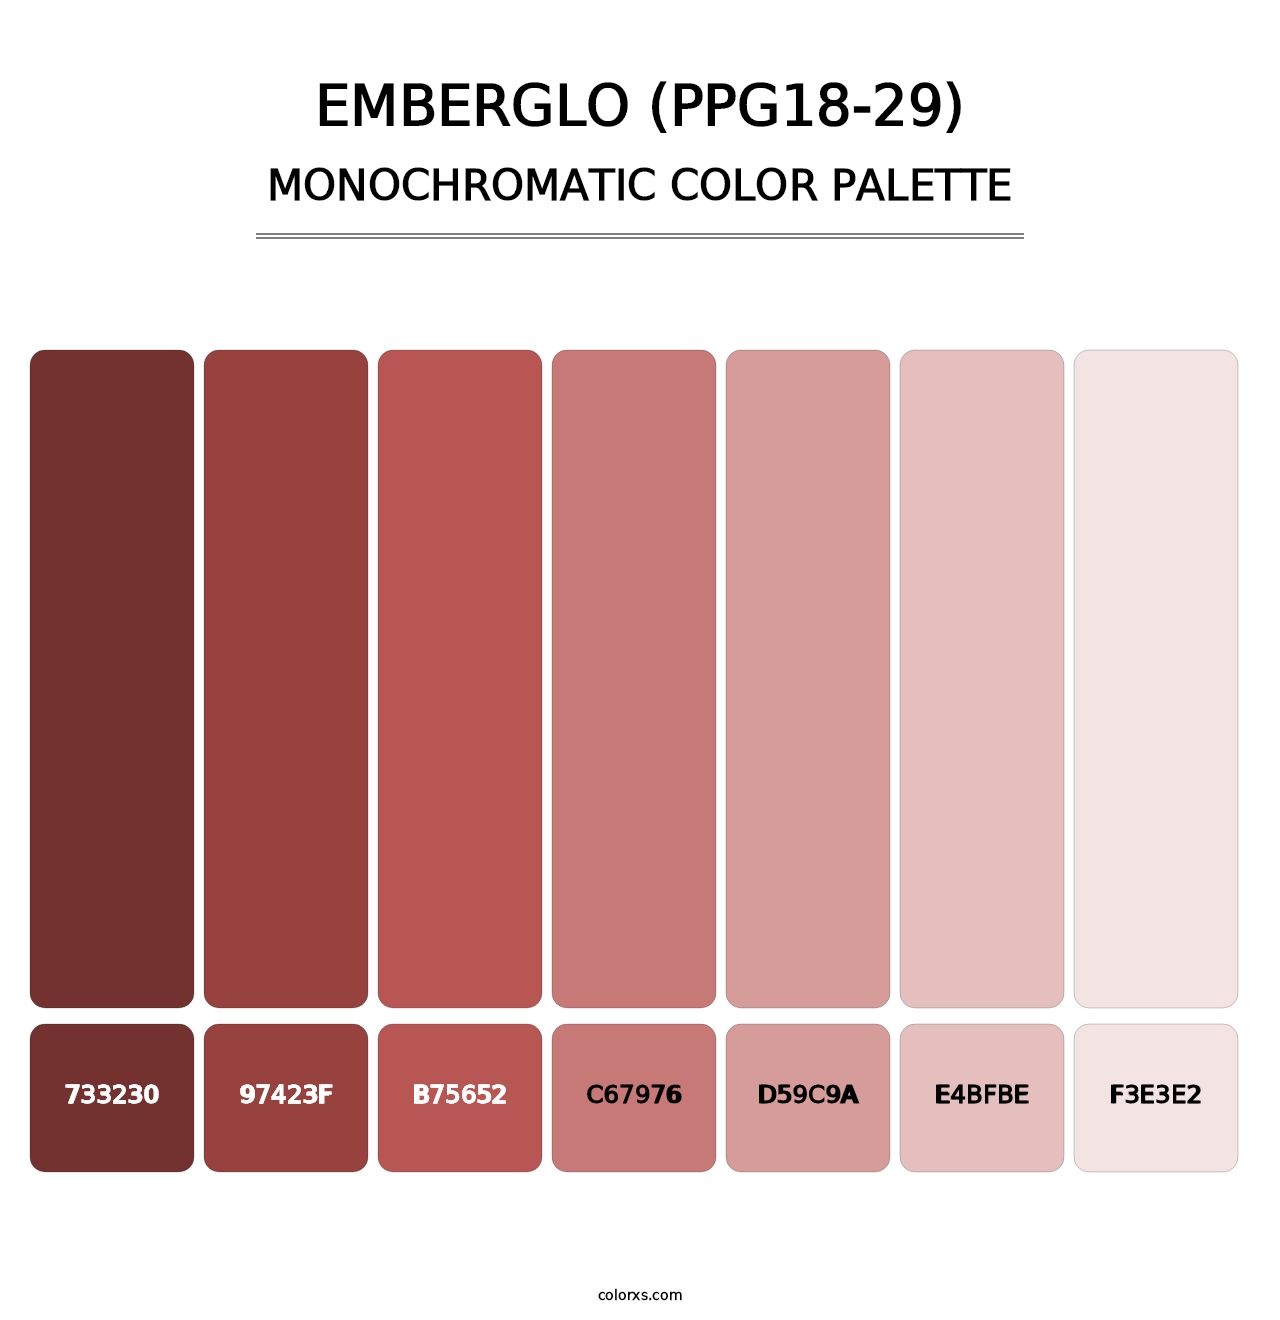 Emberglo (PPG18-29) - Monochromatic Color Palette